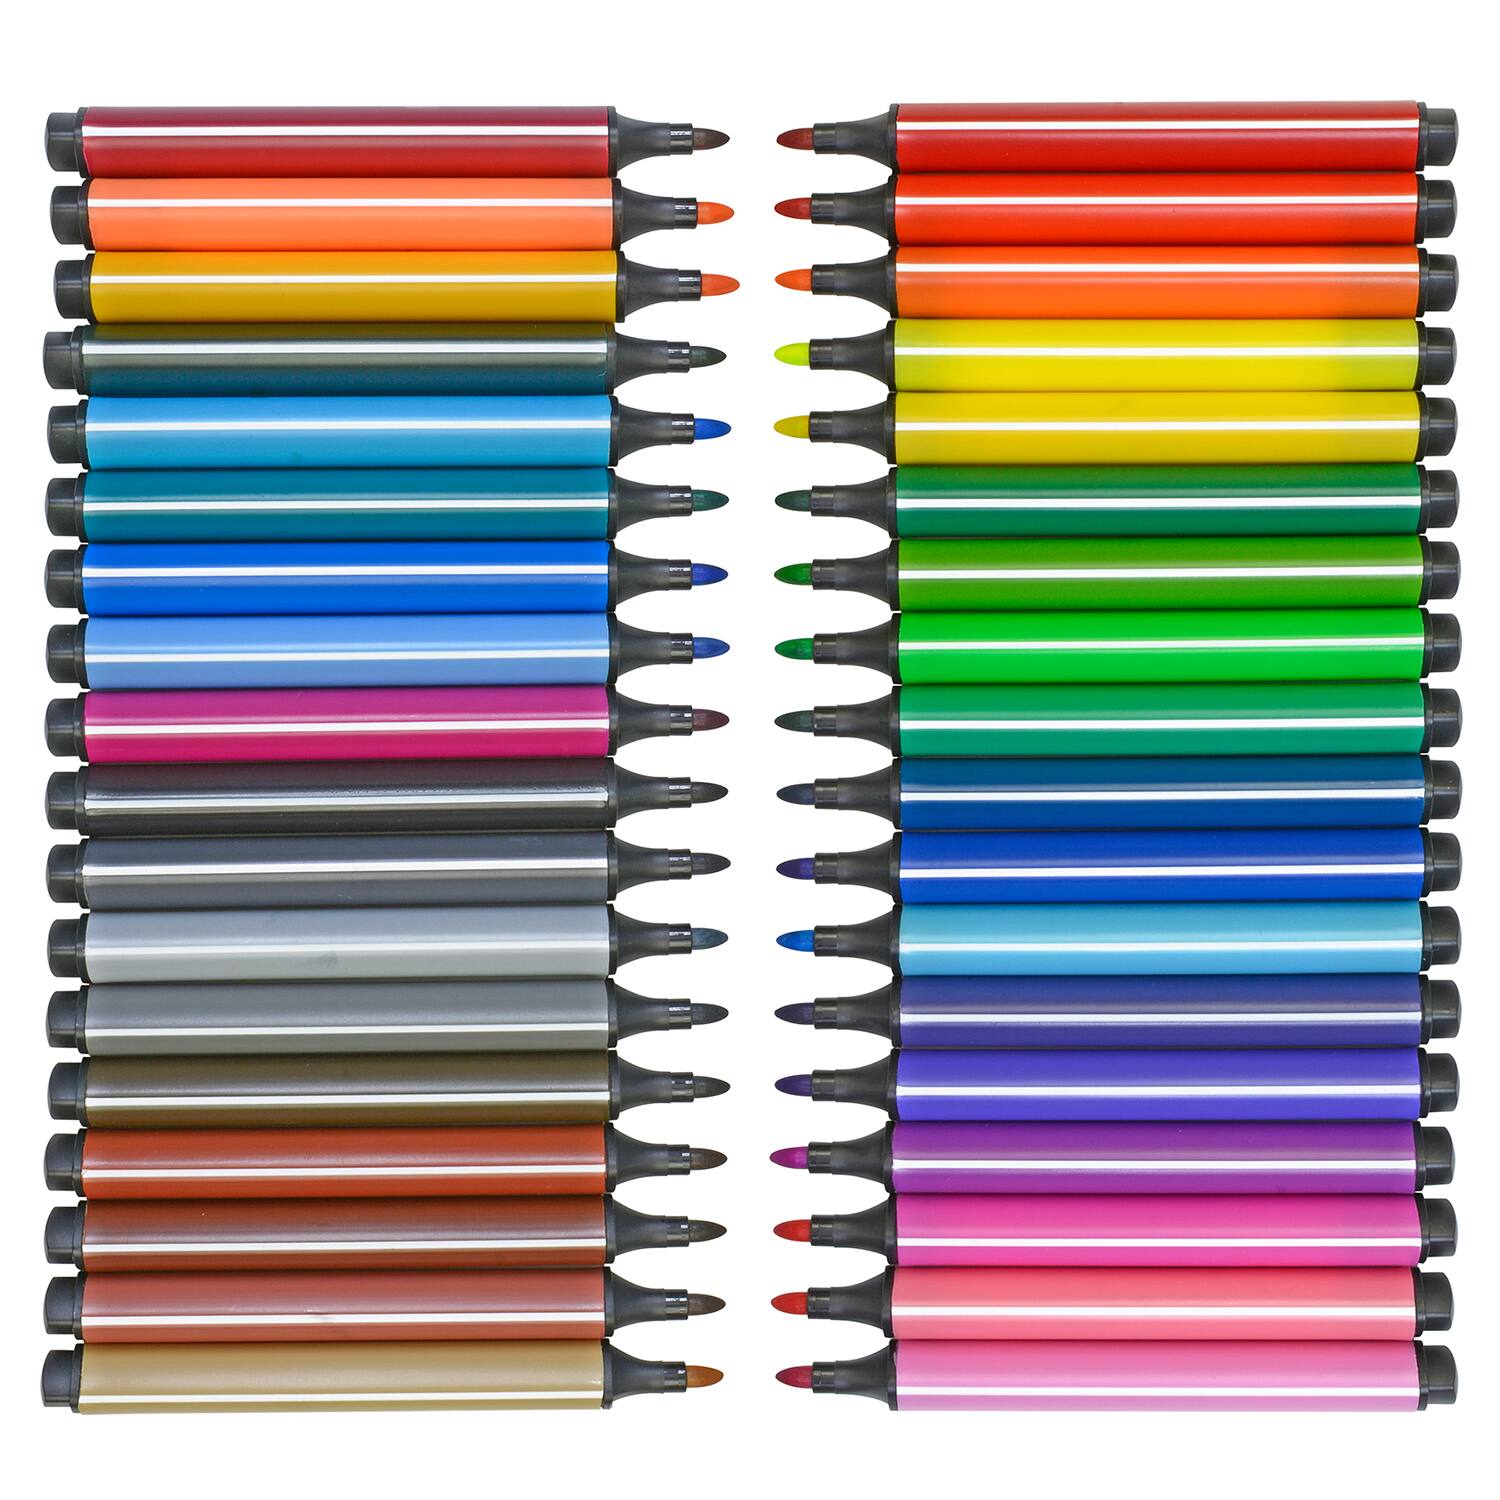 The Pencil Grip Magic Stix 48 Color Triangular Washable Markers